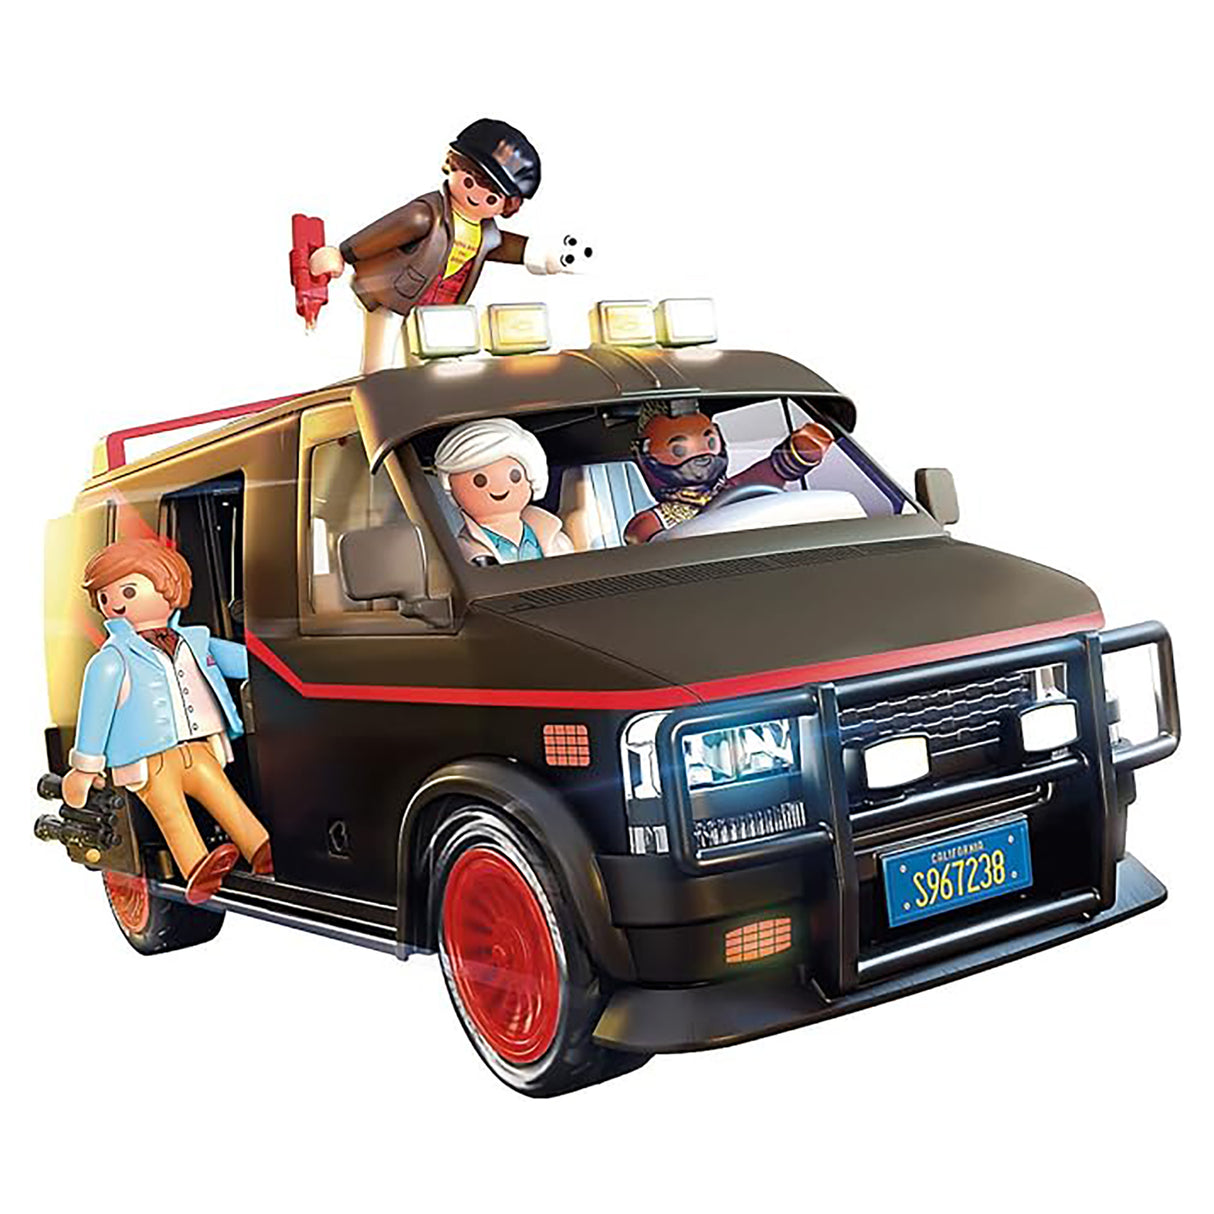 Playmobil A-Team Van (69 pieces)